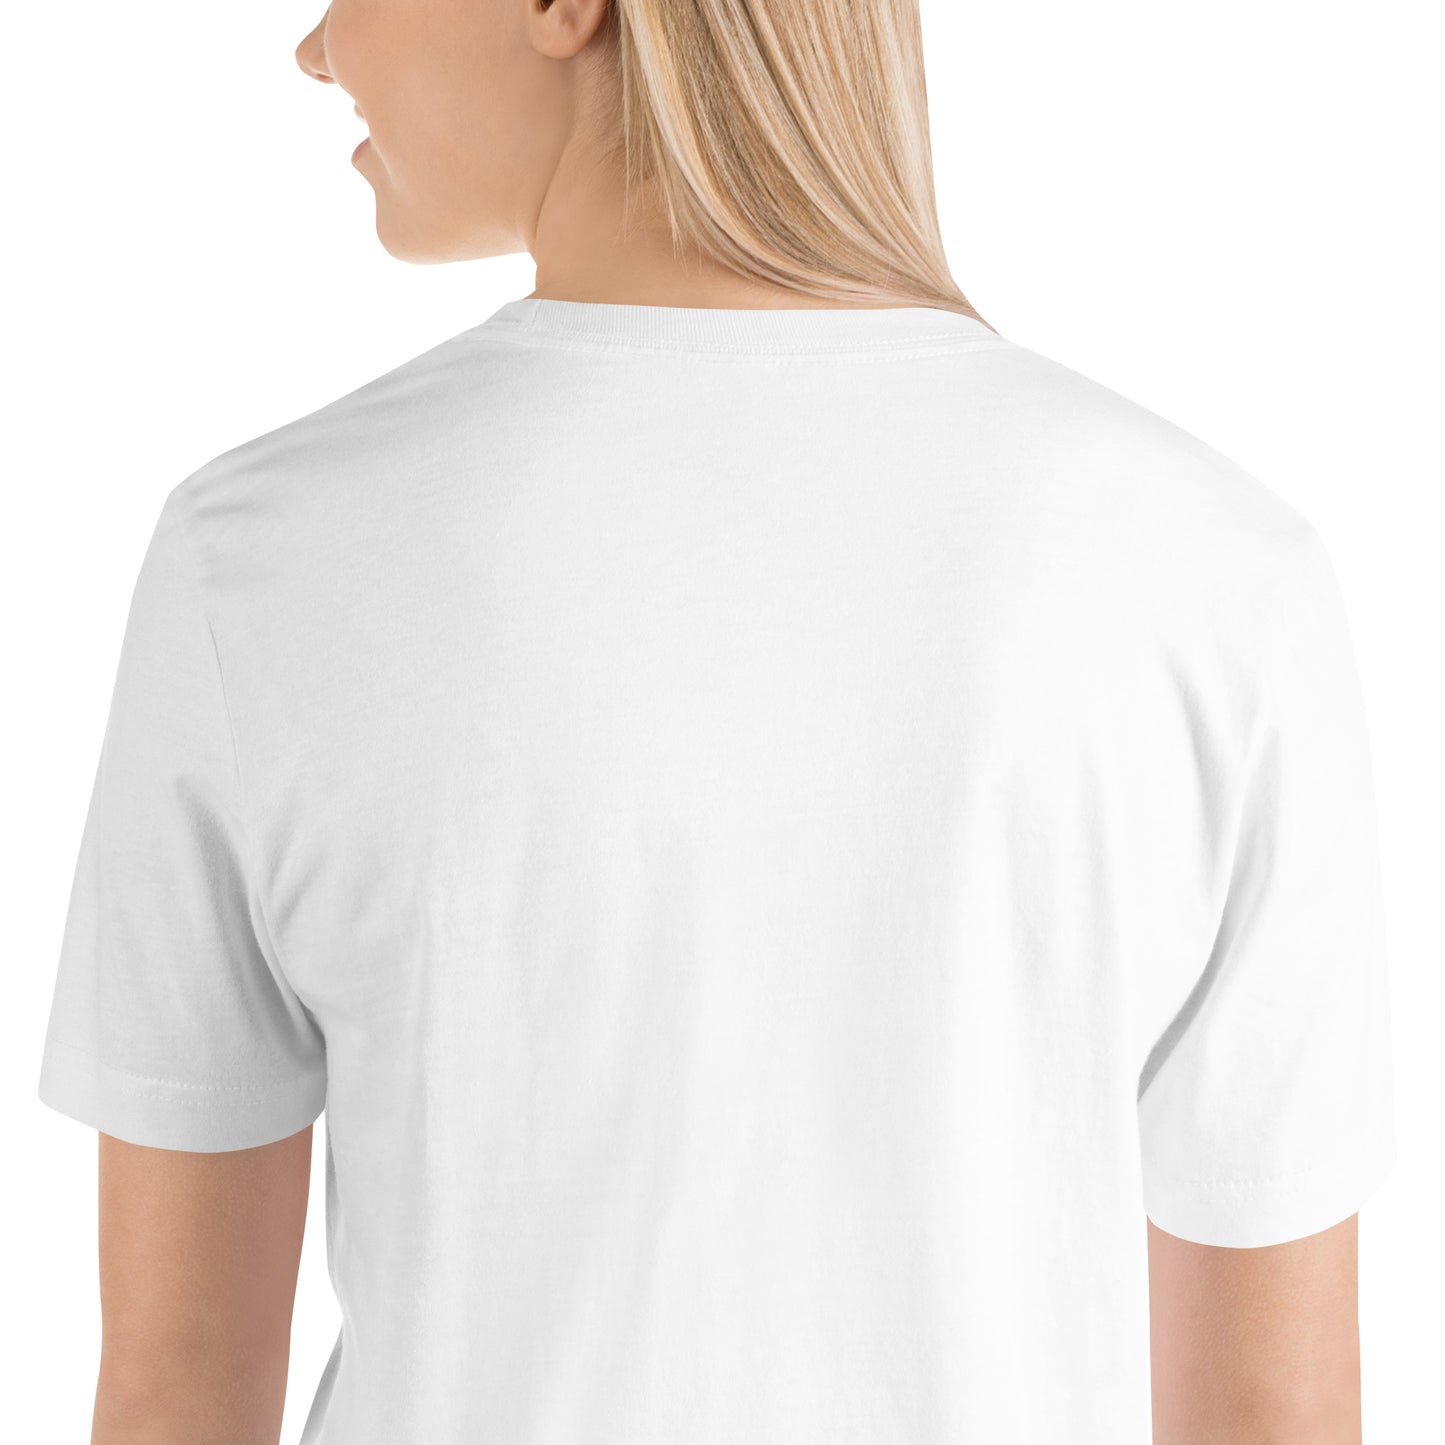 Women's Relaxed Soft & Smooth Premium Quality T-Shirt Shake Your Shamrocks Saint Patrick's Day Design by IOBI Original Apparel